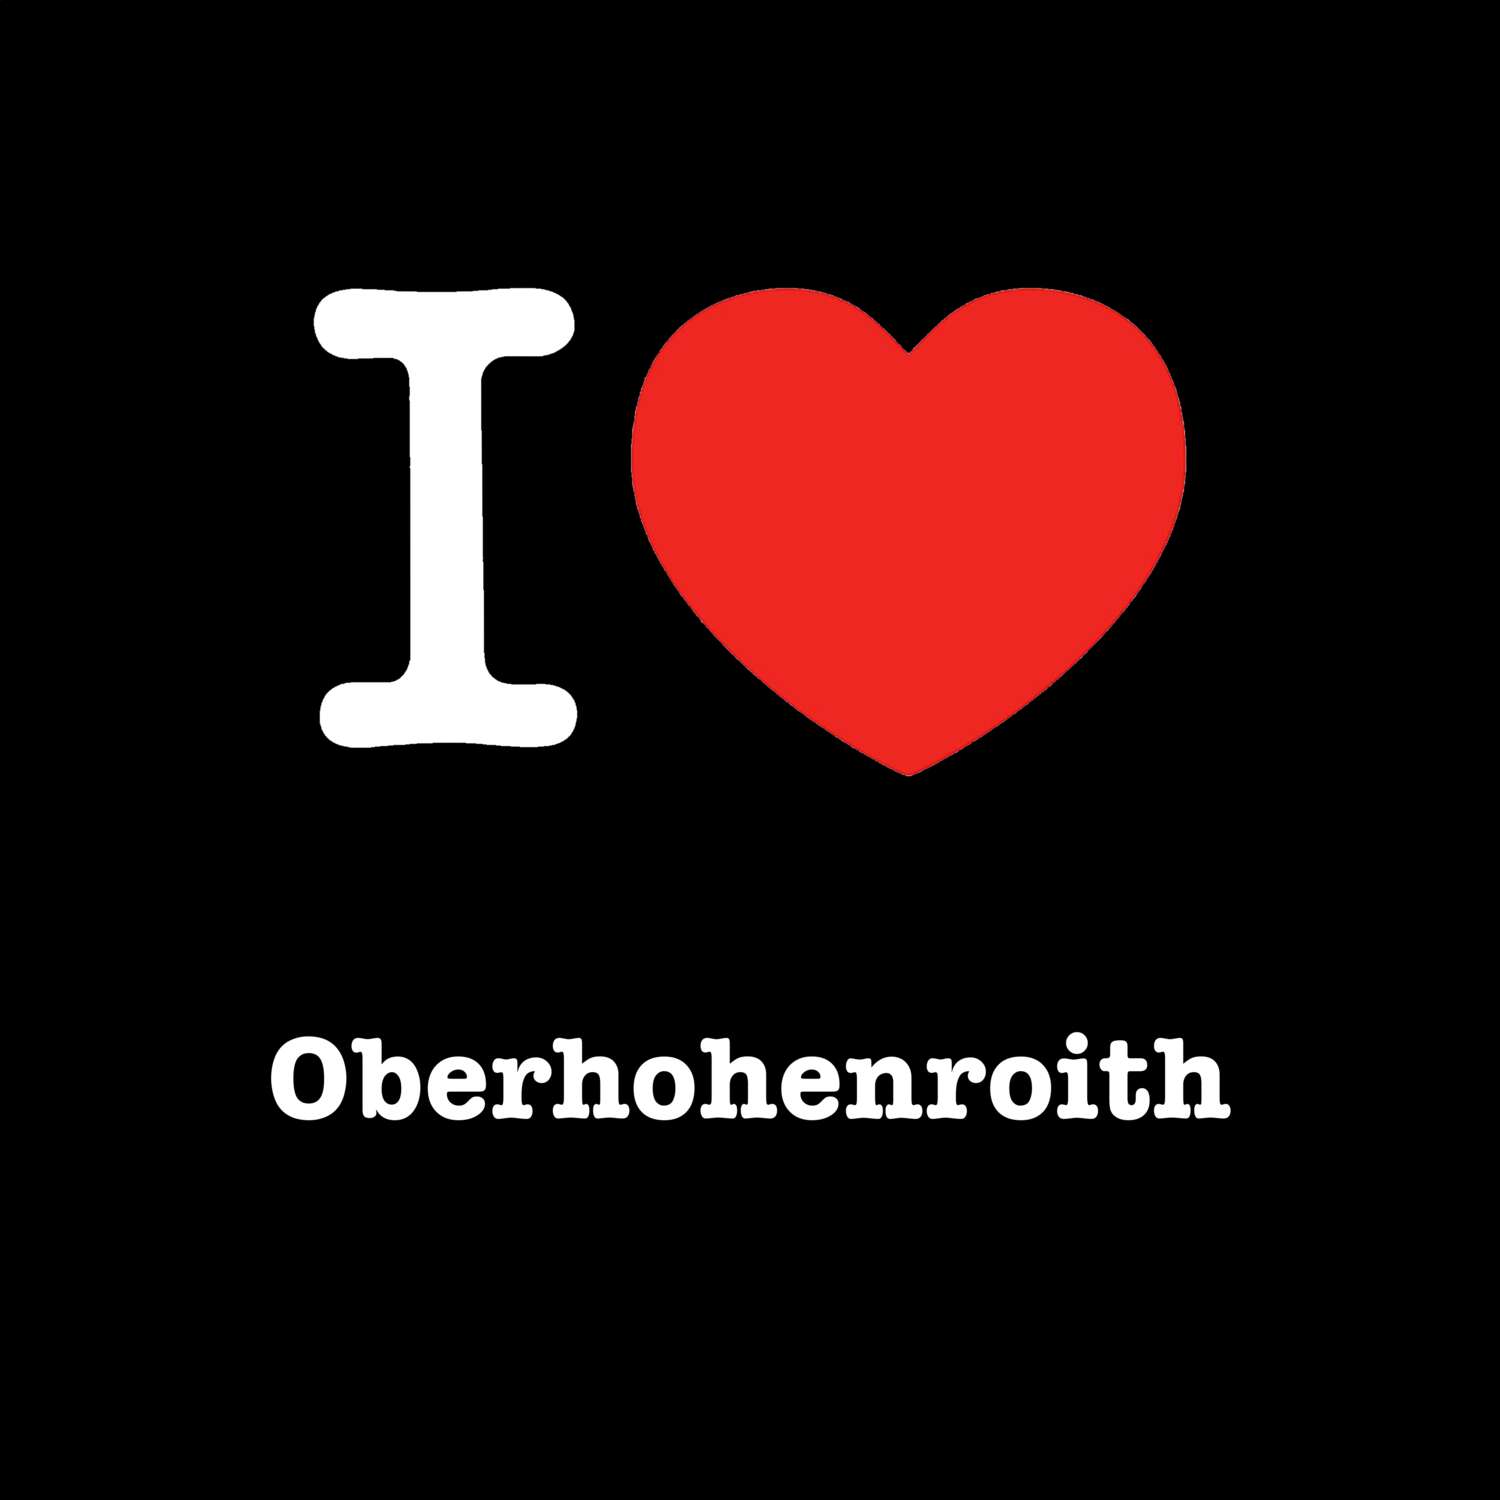 Oberhohenroith T-Shirt »I love«